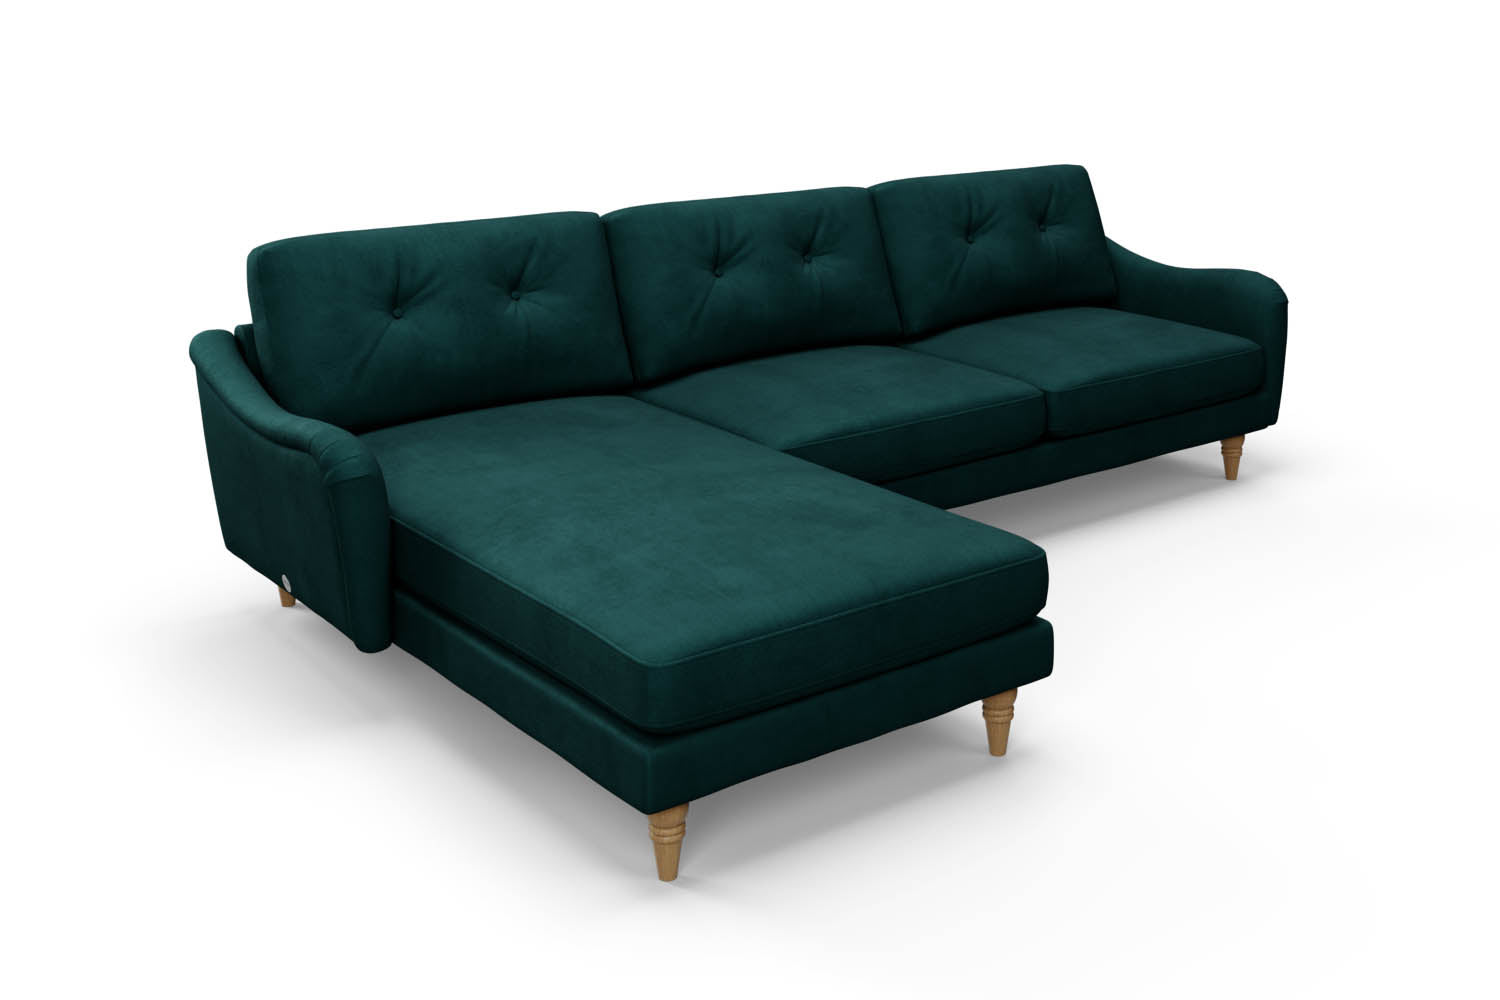 The Austen Lounger - Left Hand Chaise Sofa - Pine Green